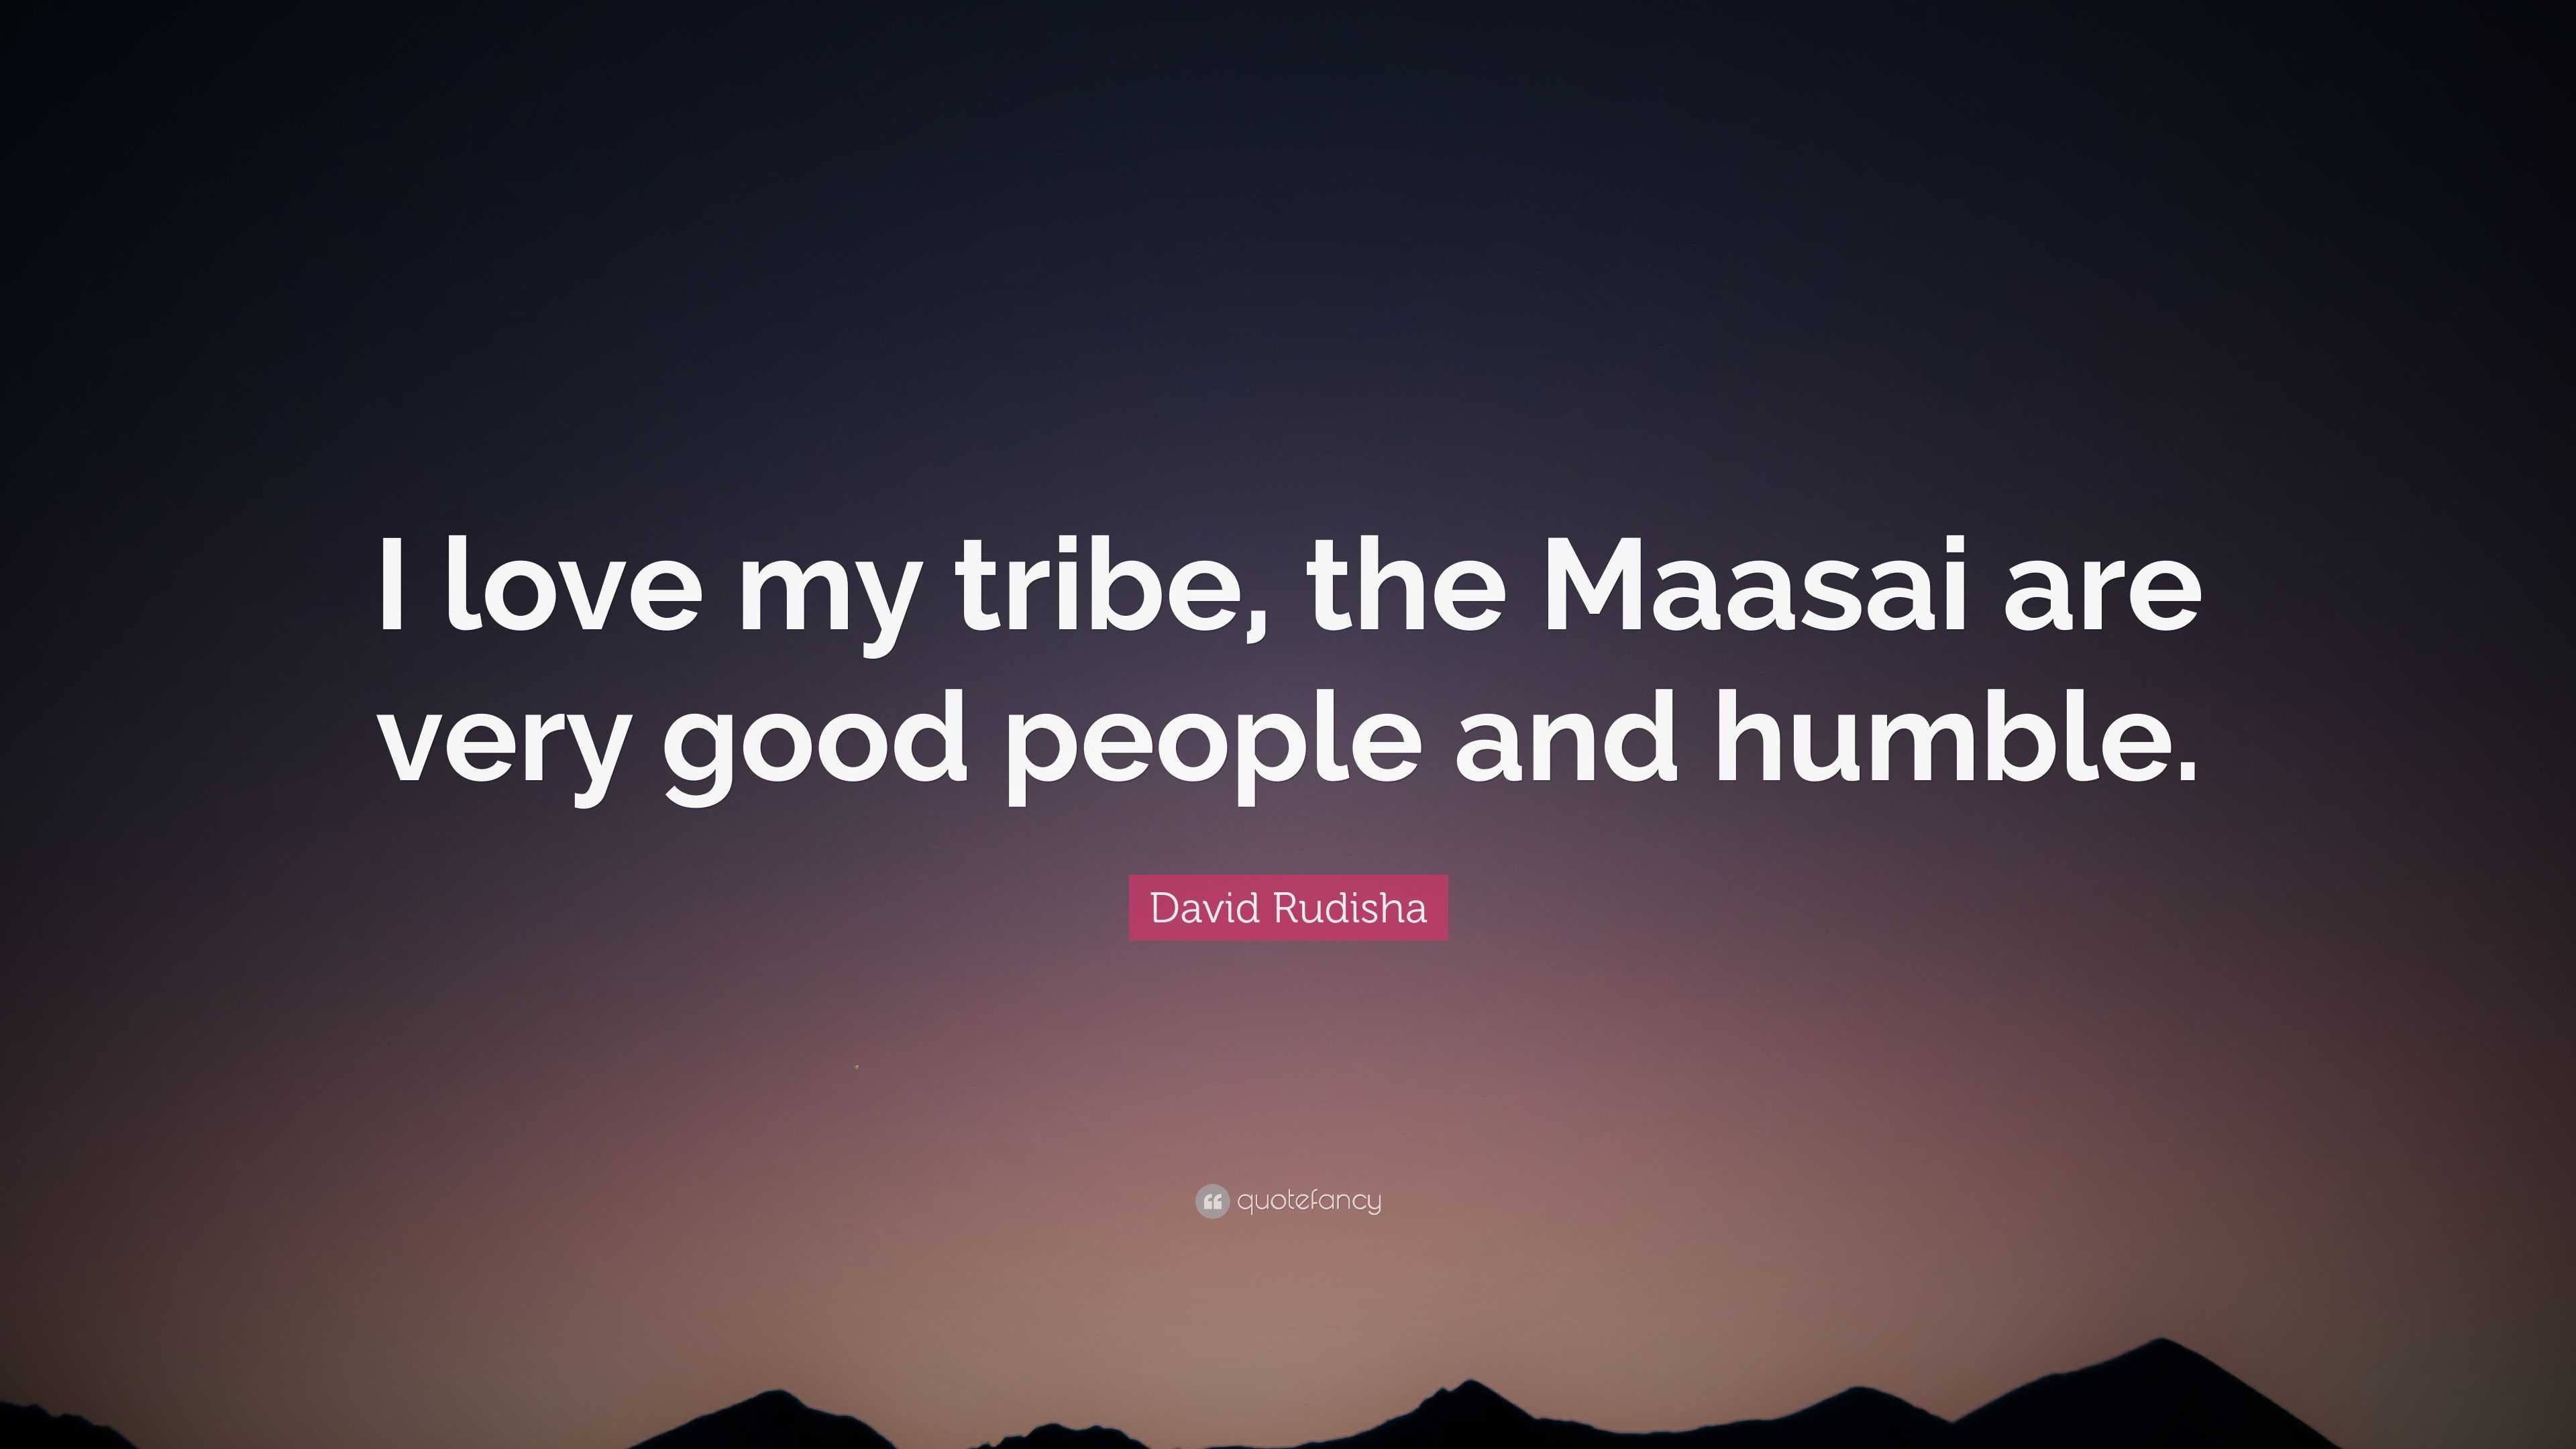 David Rudisha Quote: “I love my tribe, the Maasai are very good people